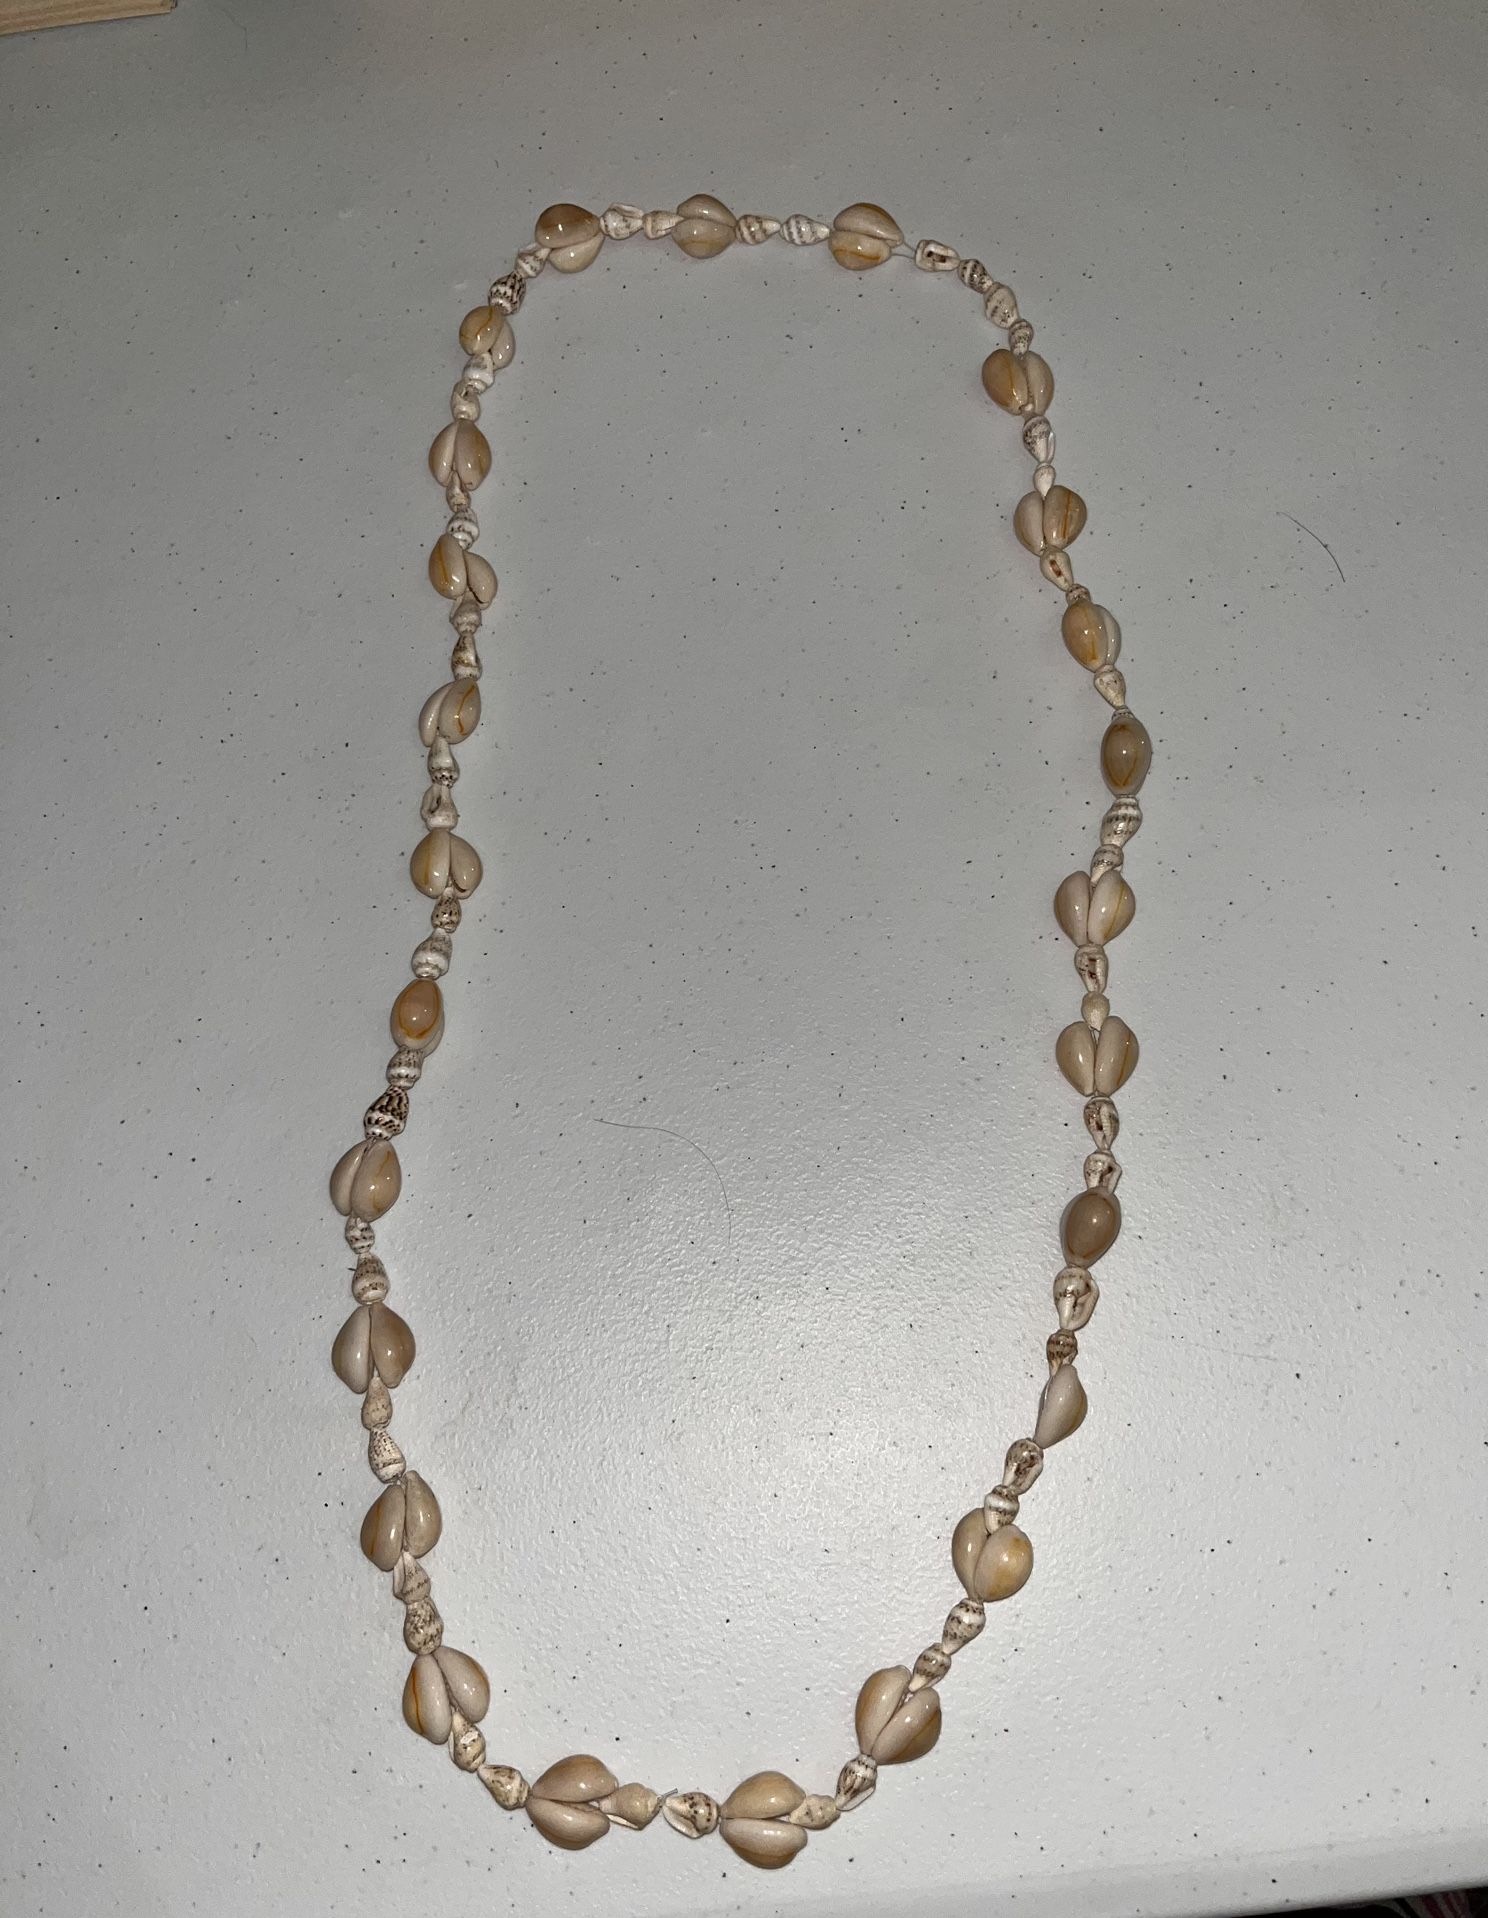 Seashell Necklace Bracelet Anklet